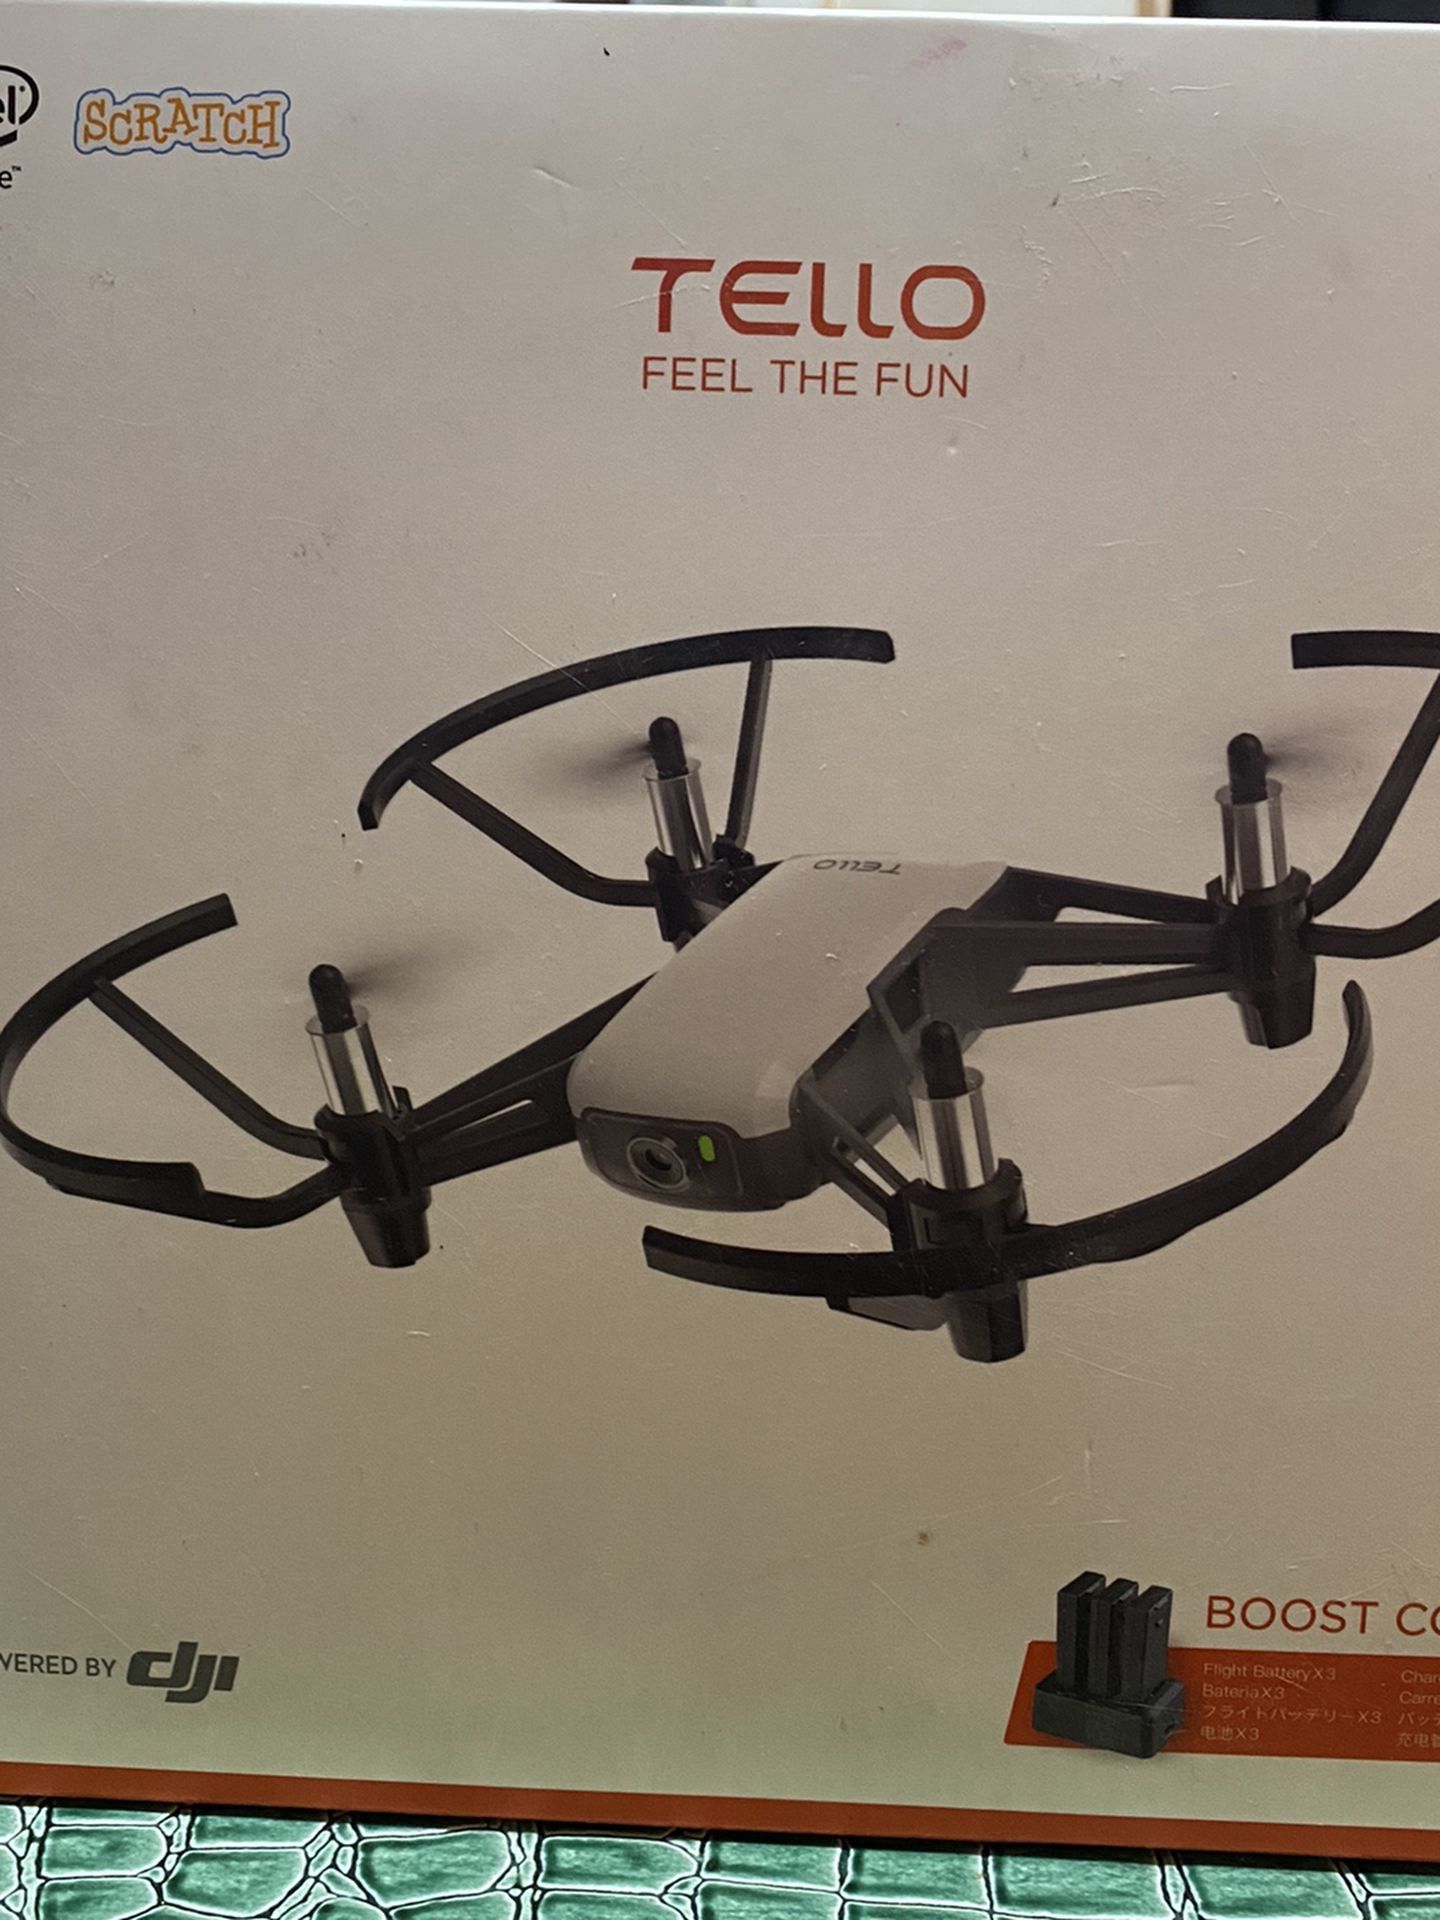 Tello Boost Combo Drone By DJI